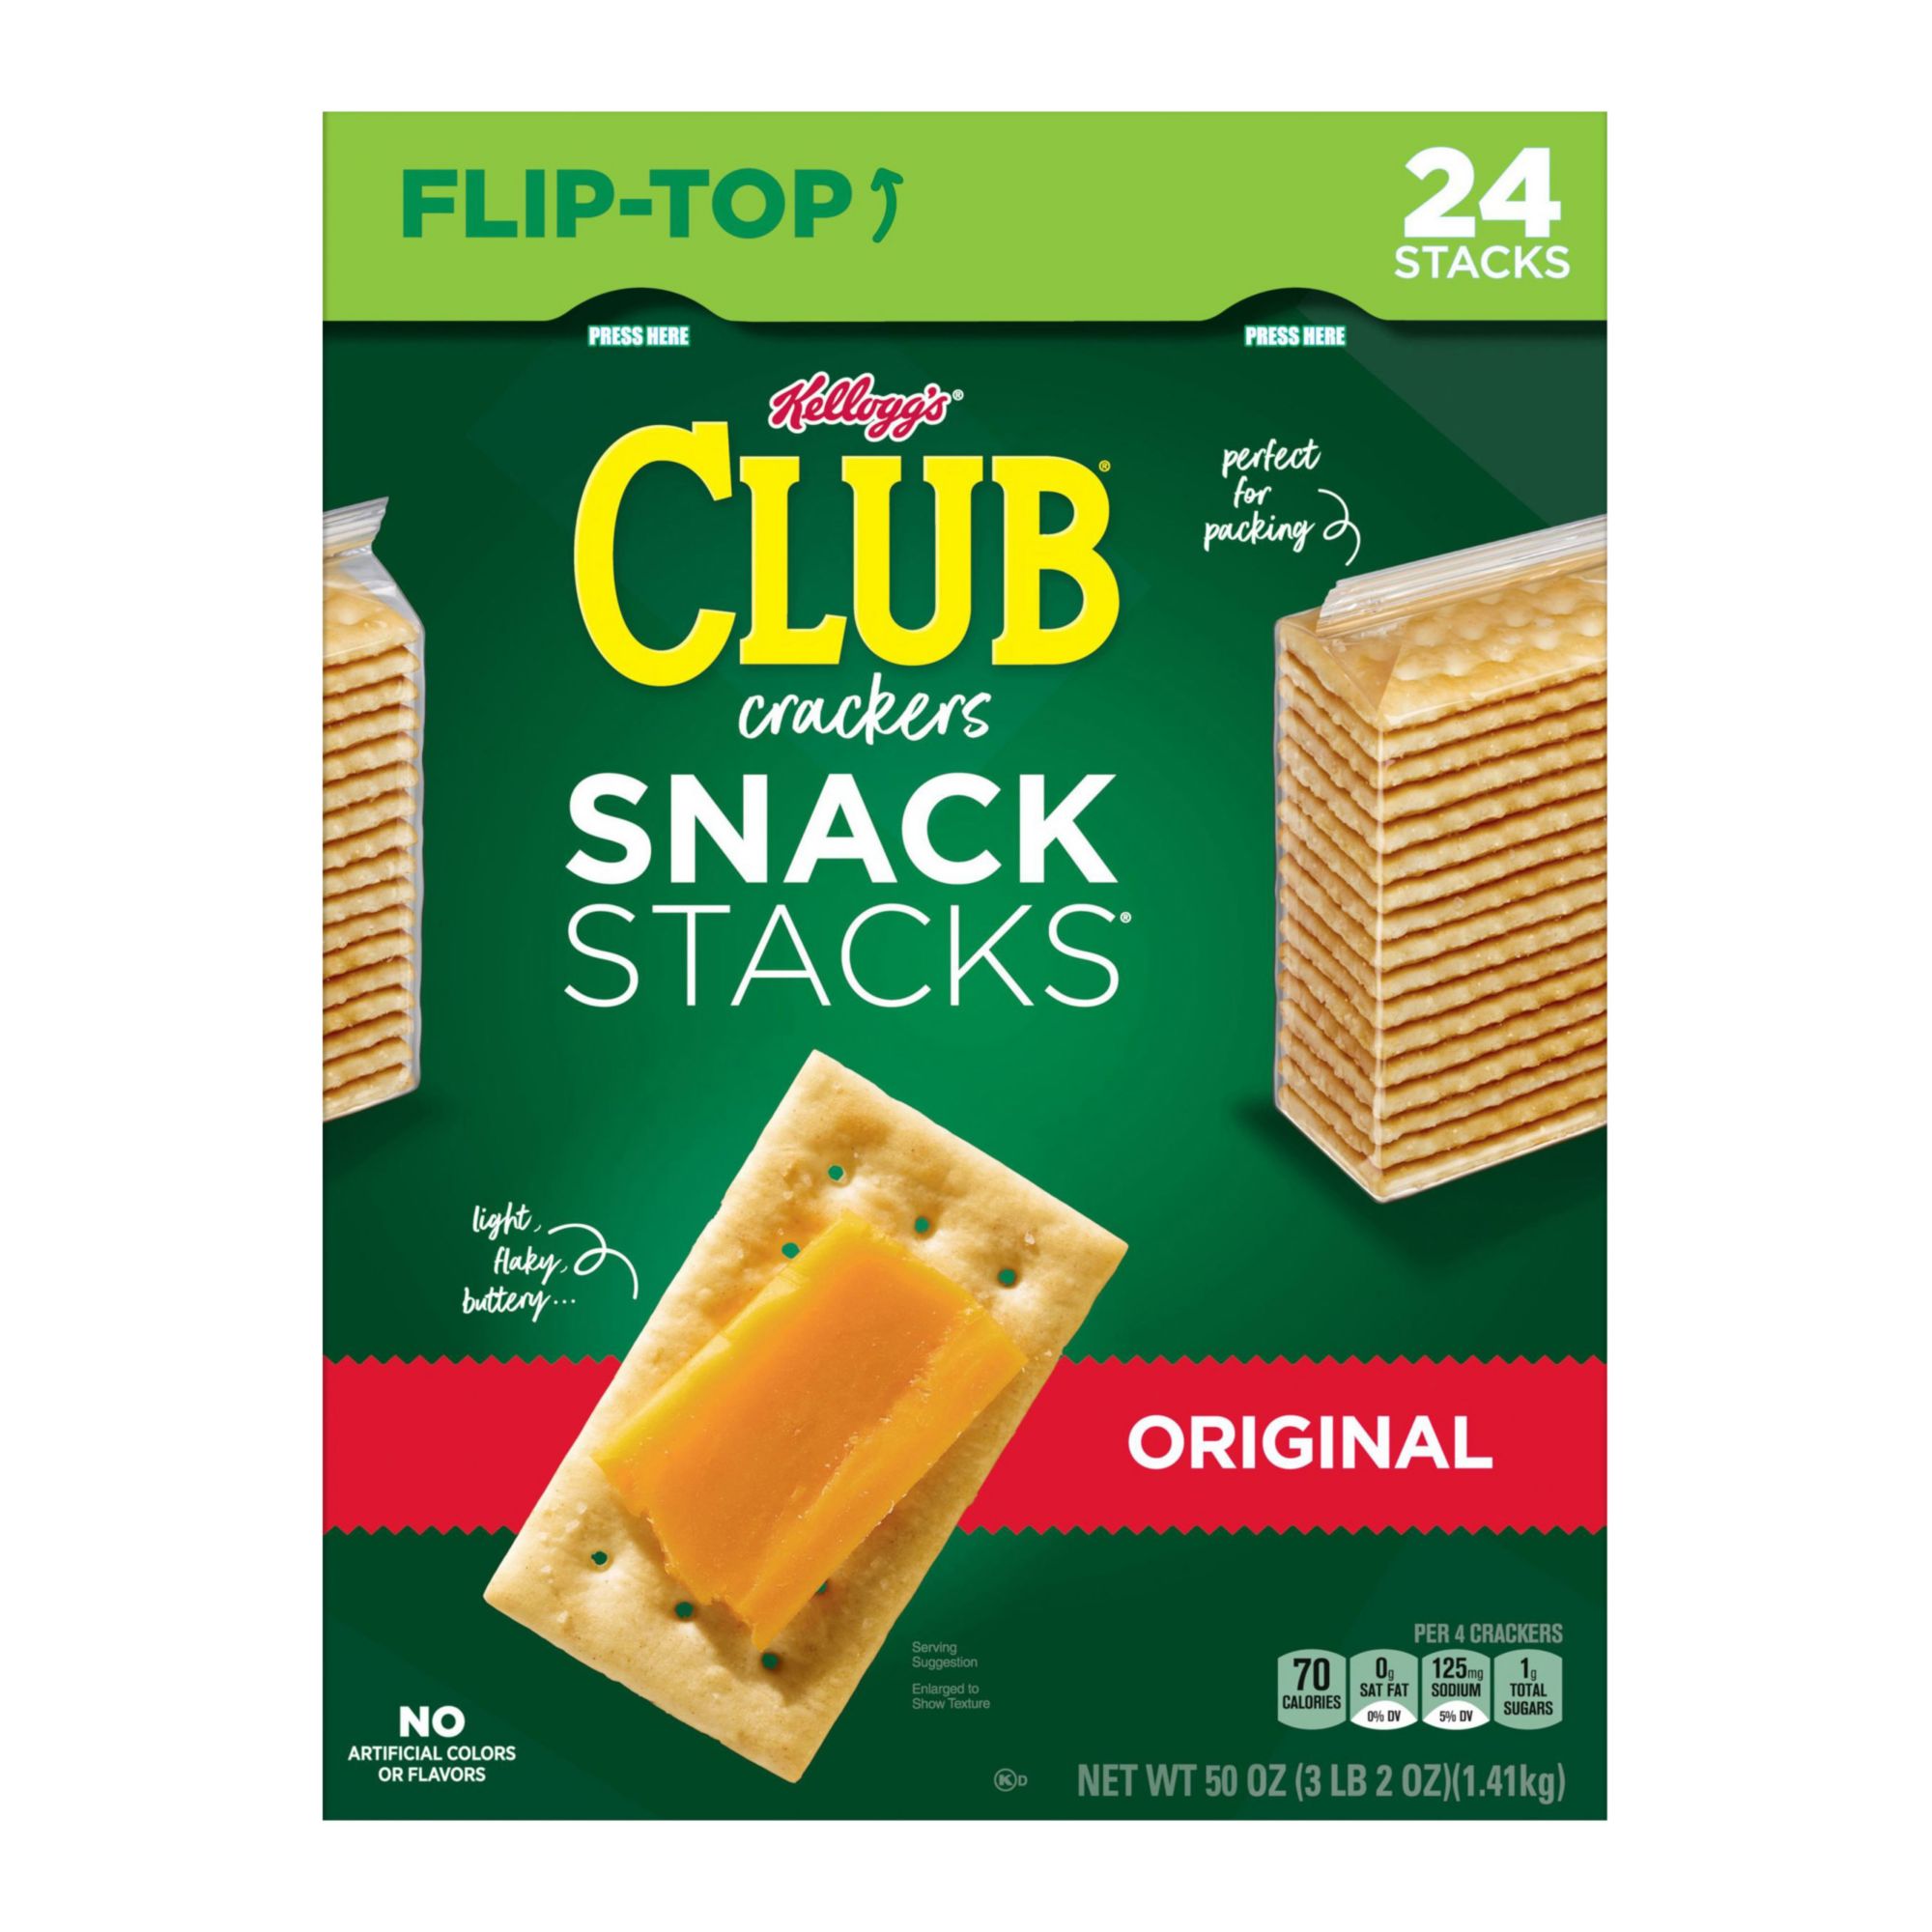 Keebler Club Cracker Snack Stacks, 24 pk.